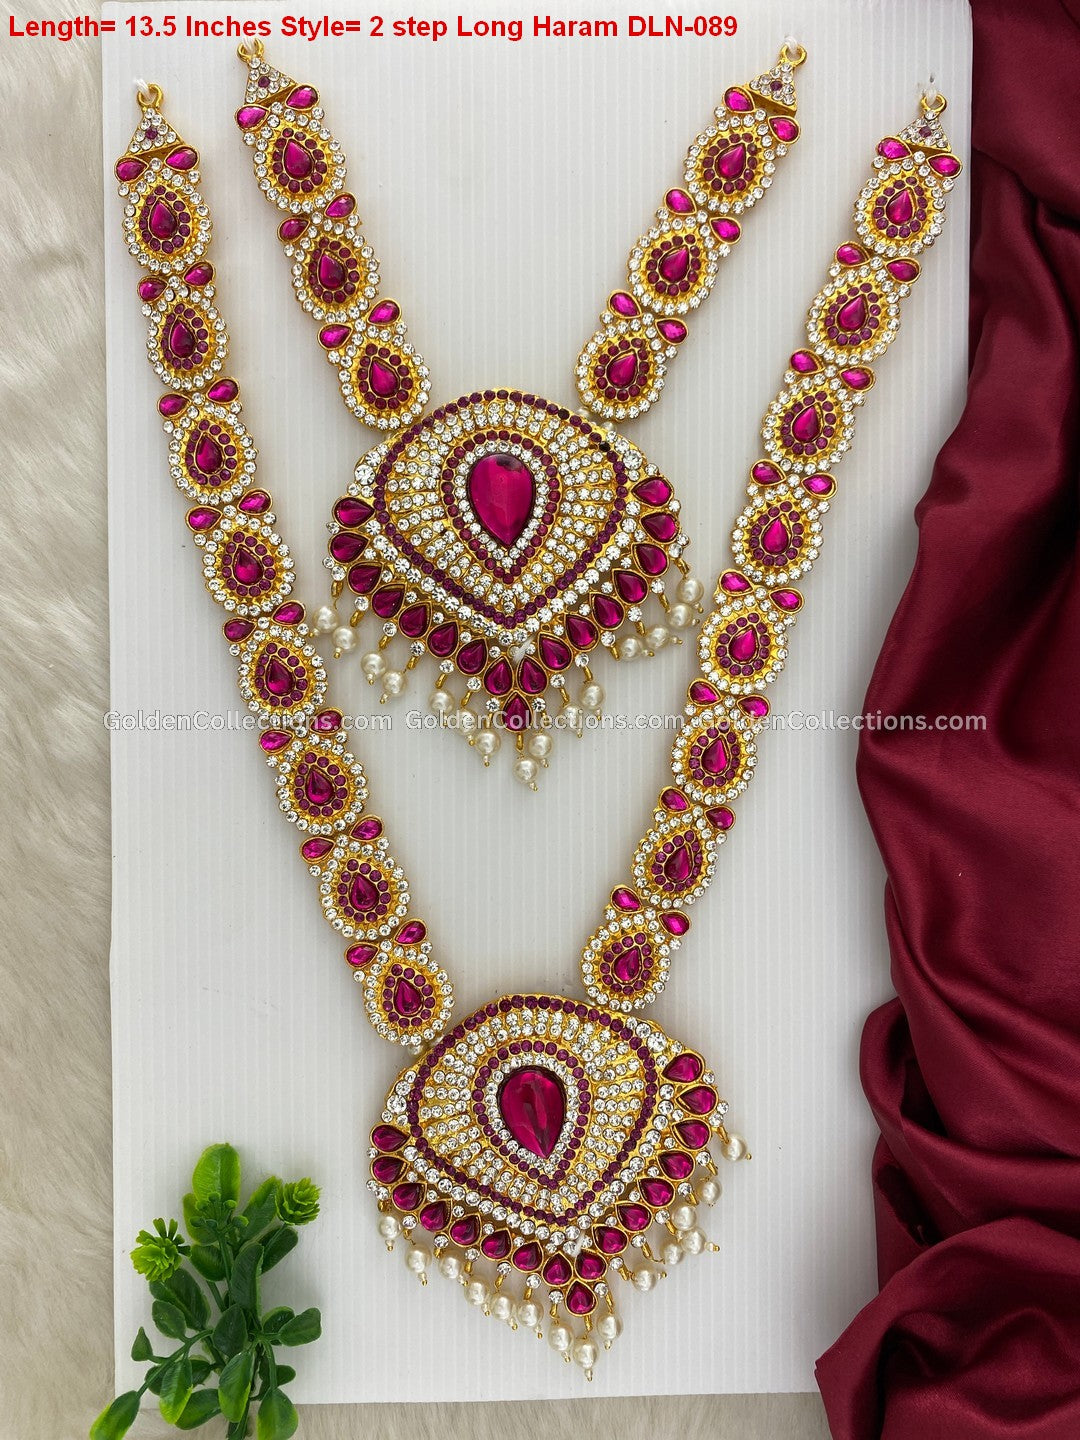 Divine Aura Long Haram - Hindu Deity Jewellery DLN-089